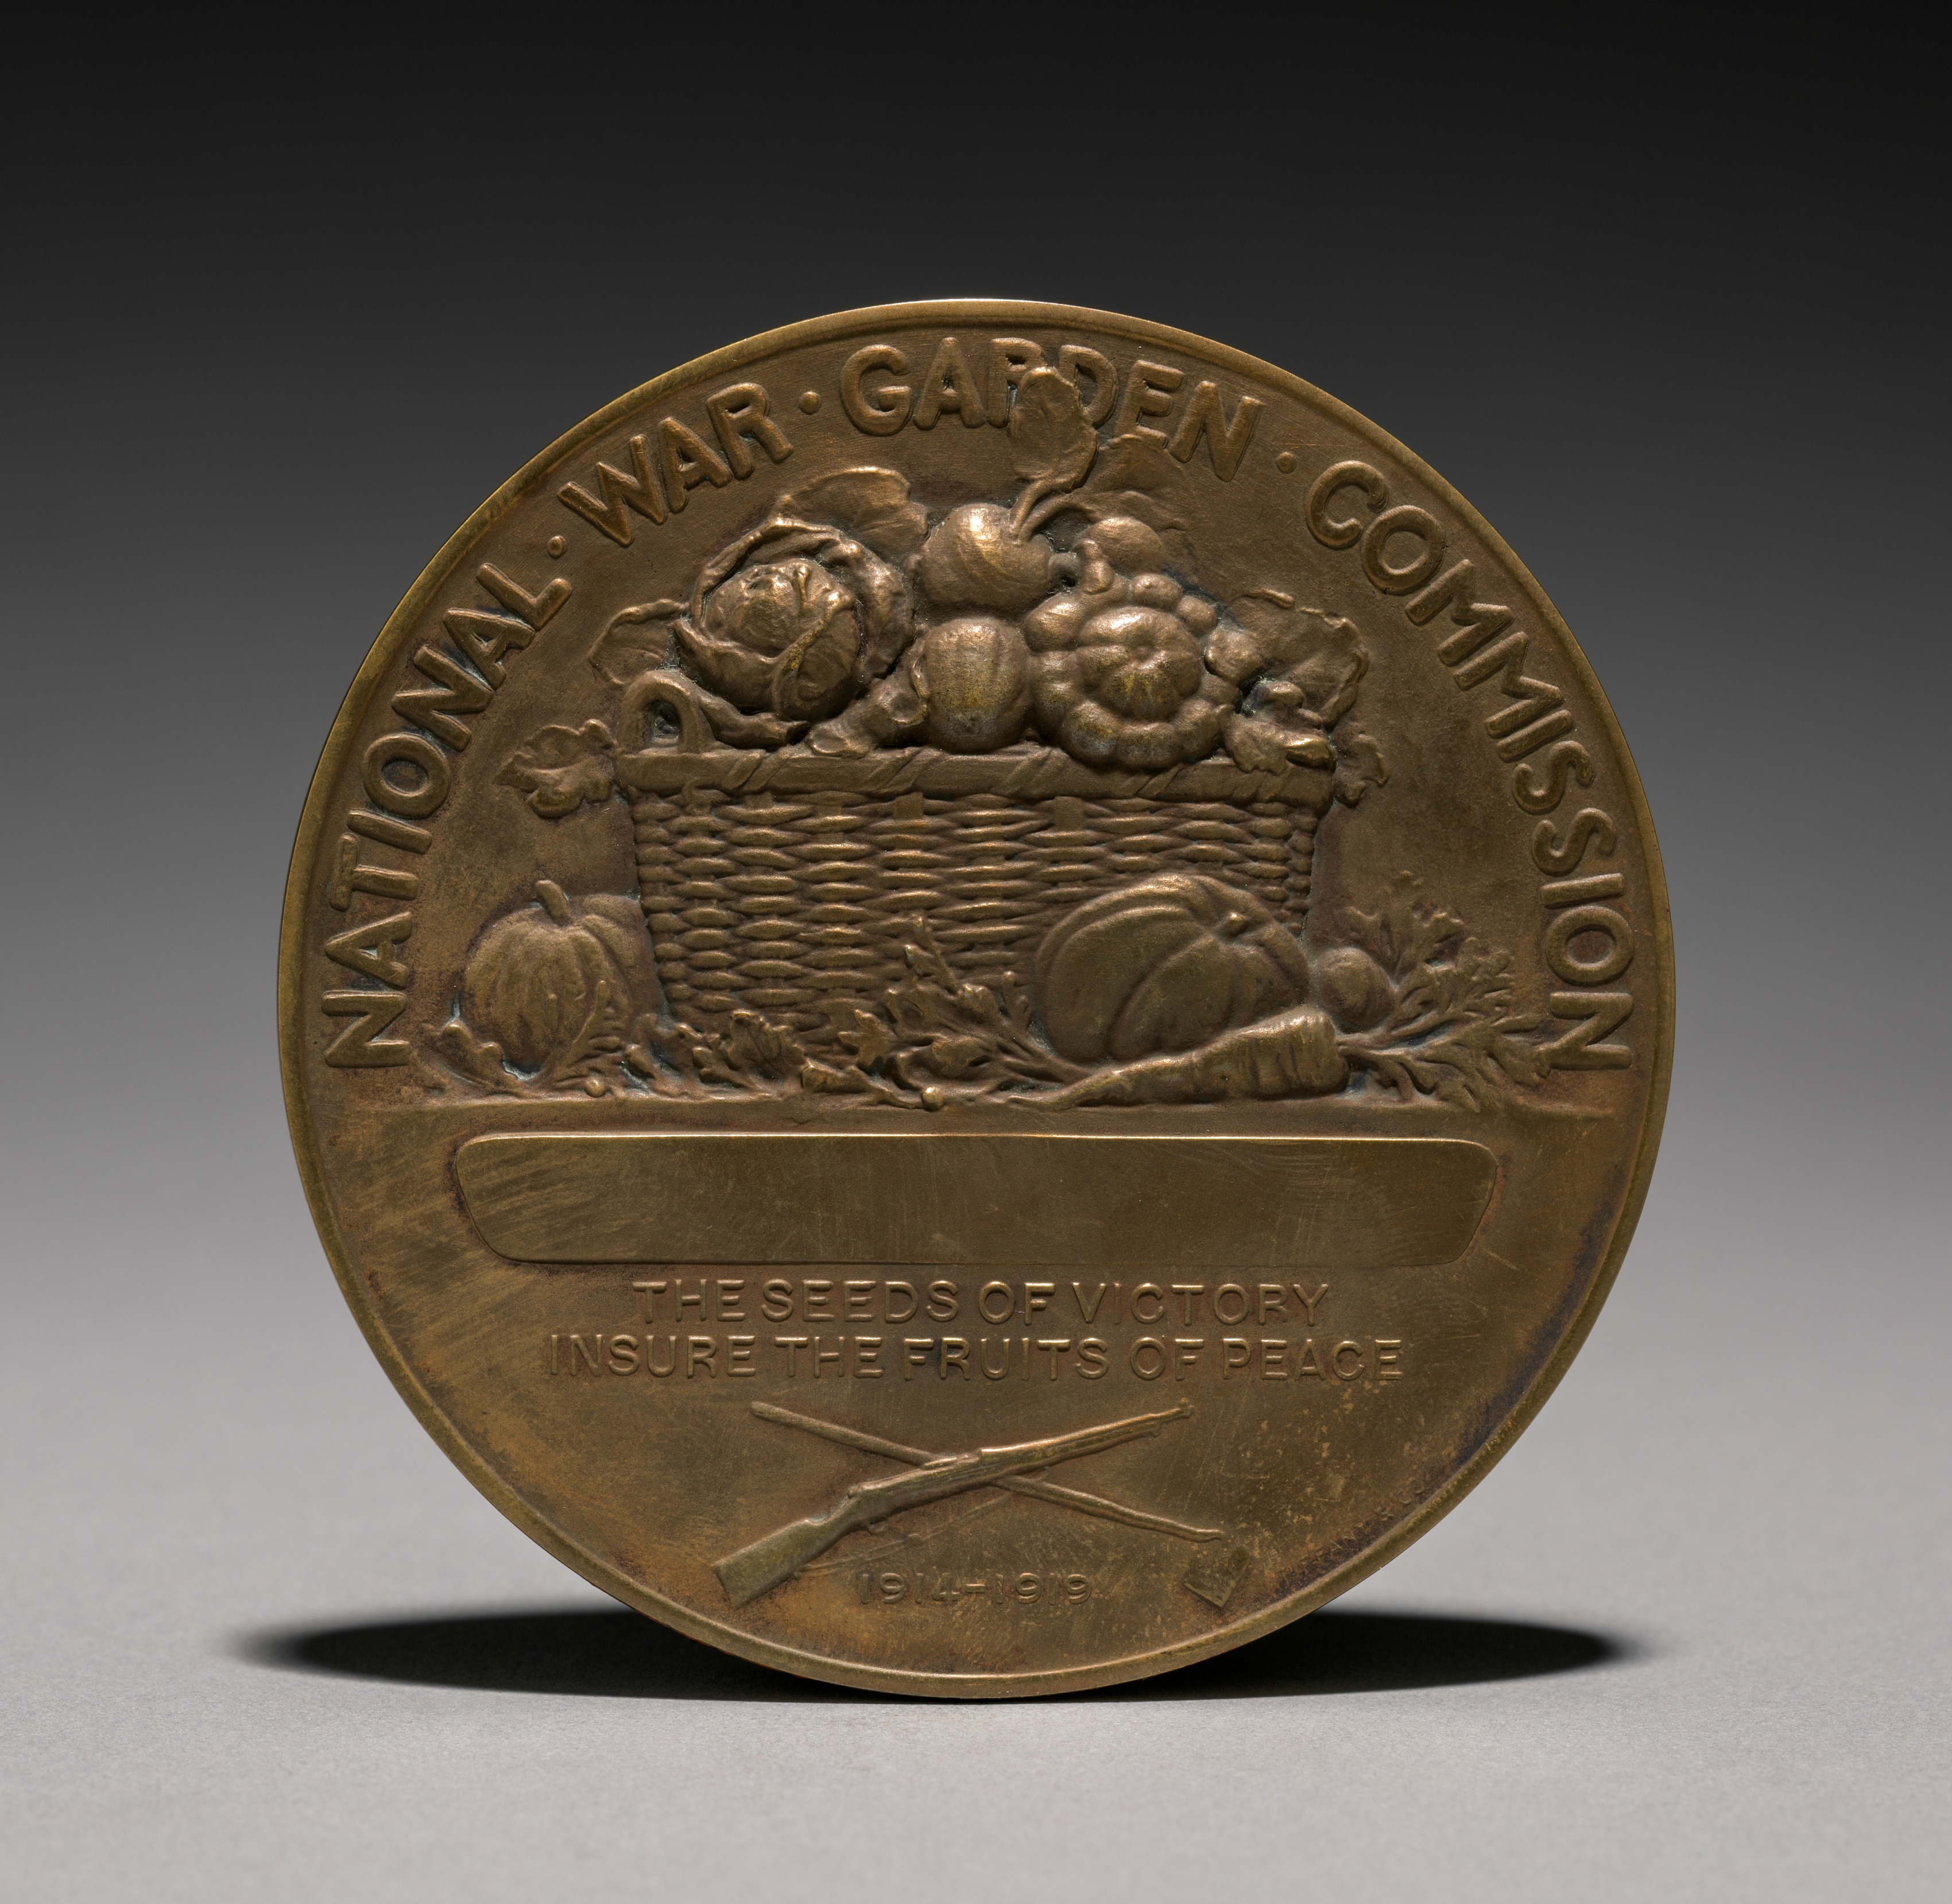 Medal: National War Garden Commission (reverse)